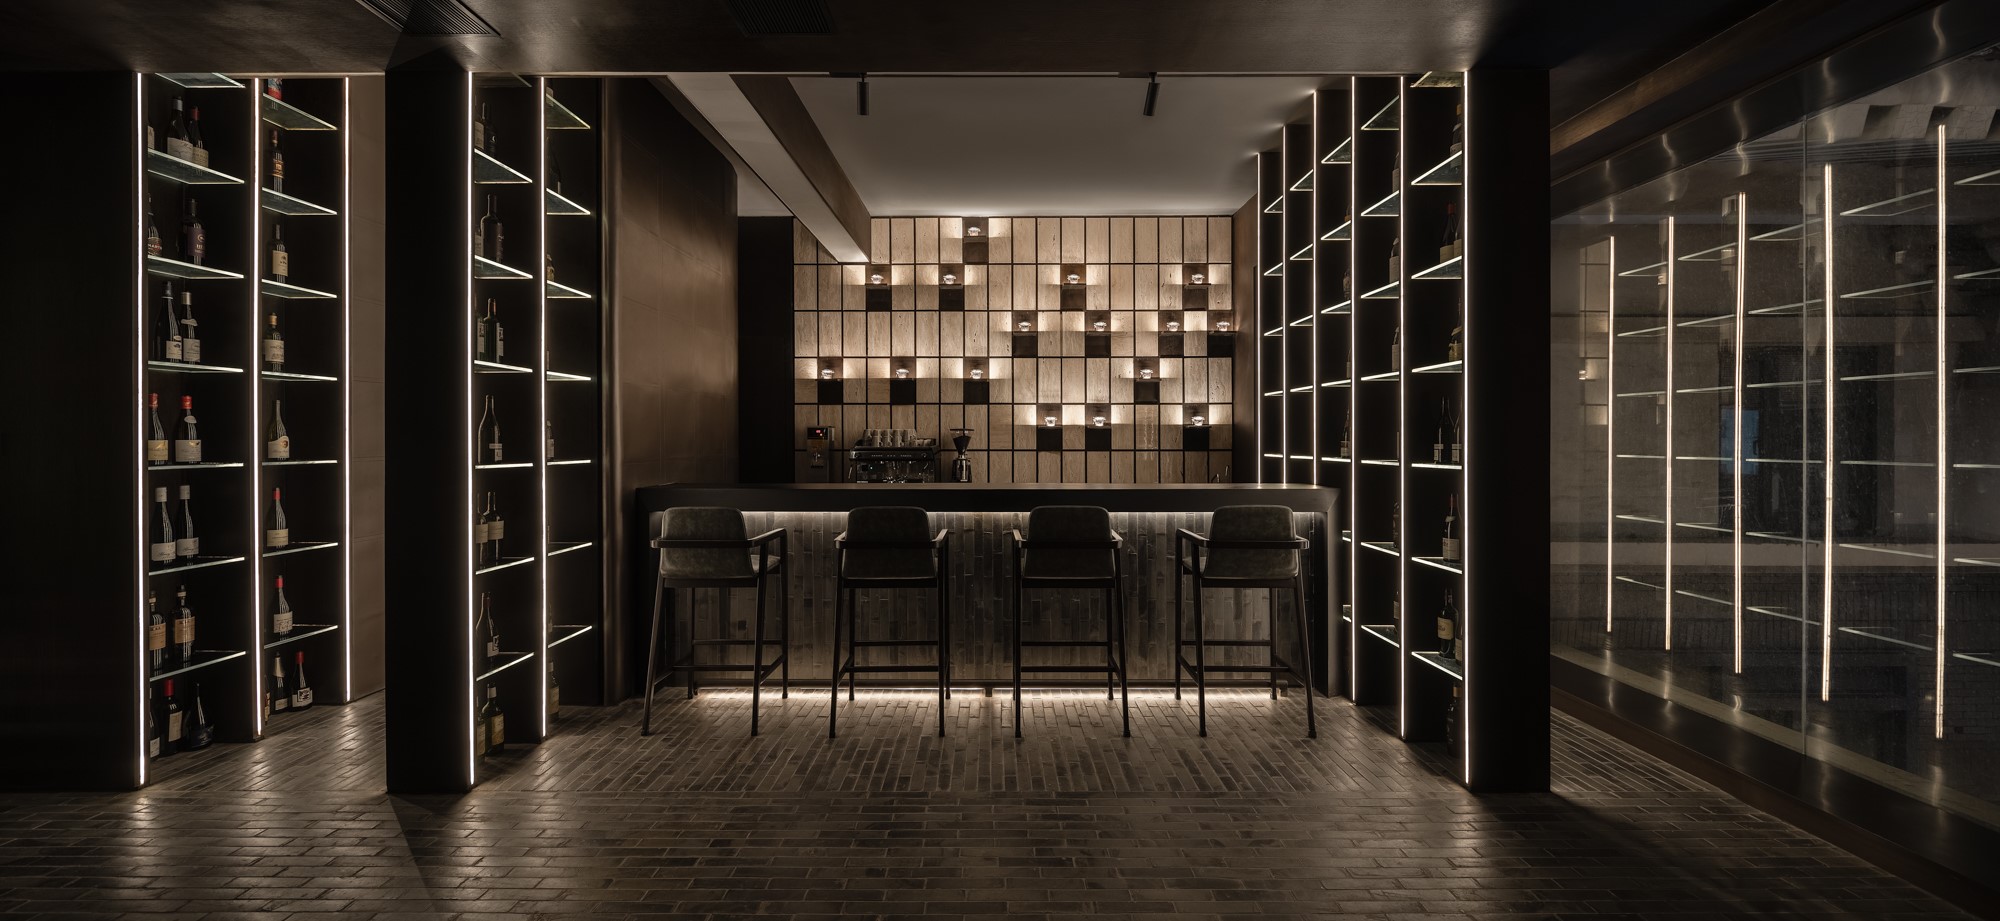 LeCoq Wine & Bistro in Xian, China by RooMoo Design Studio